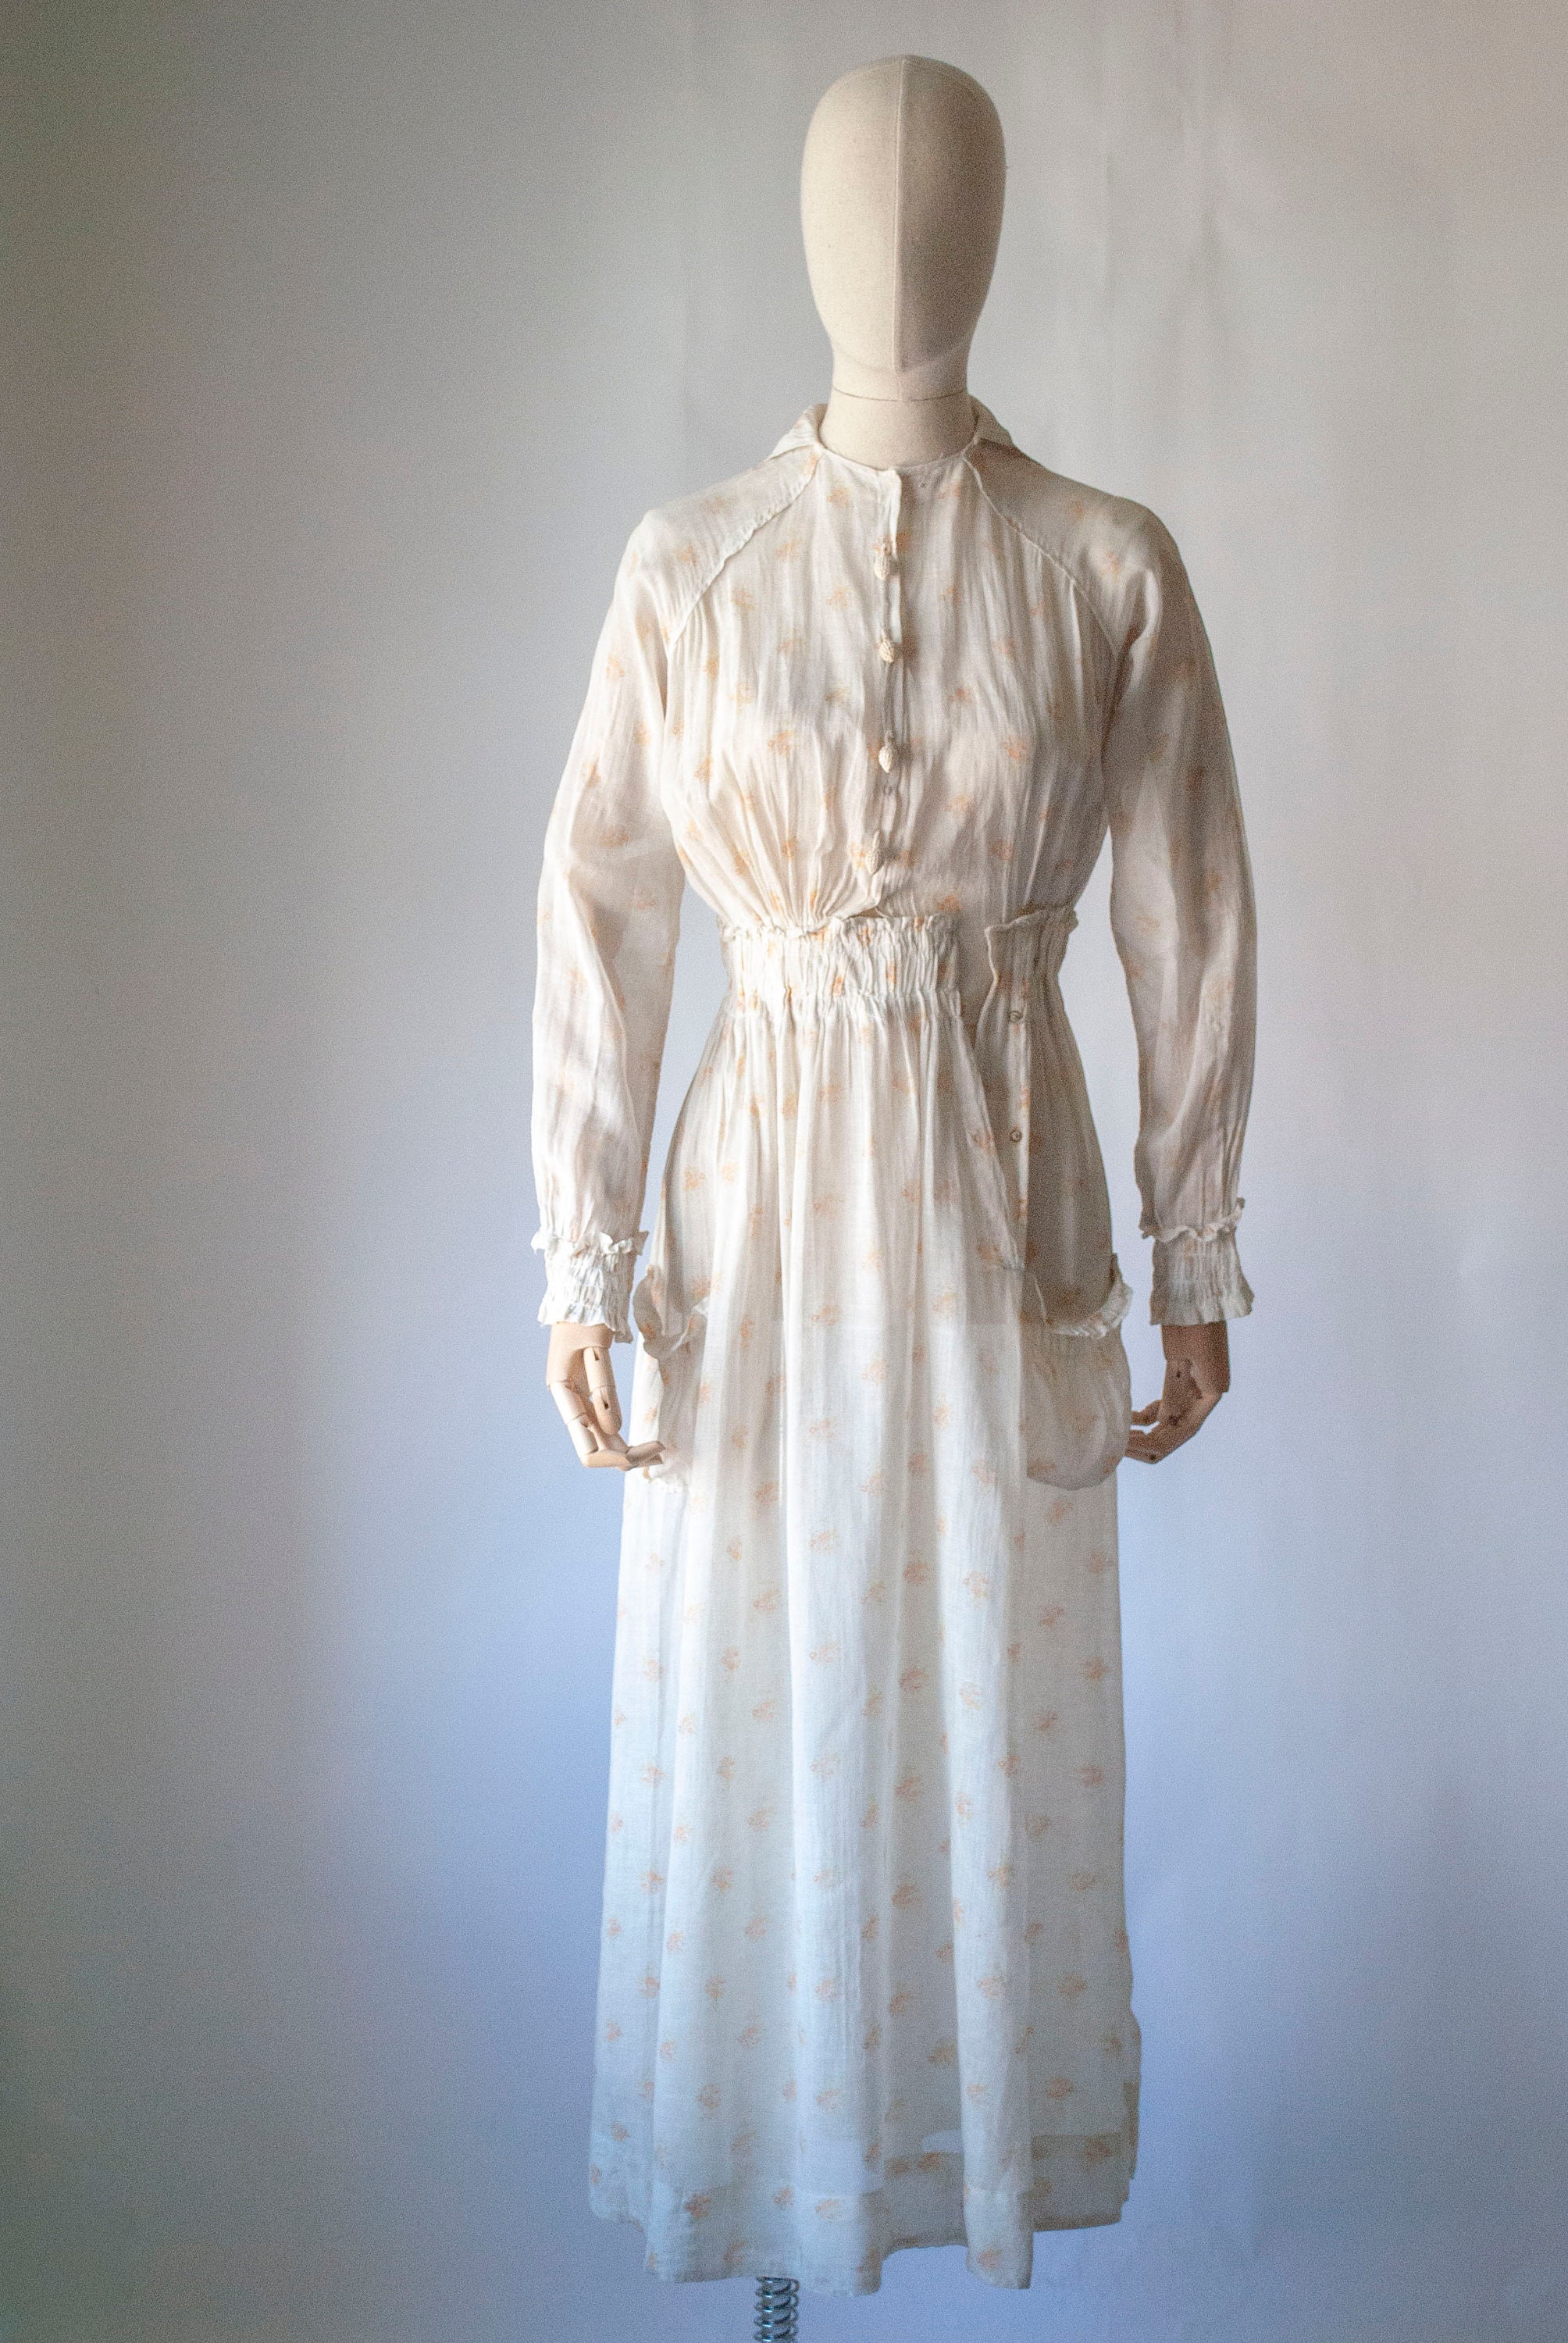 Antique 1900's Edwardian Printed Lawn Cotton Dress | Etsy